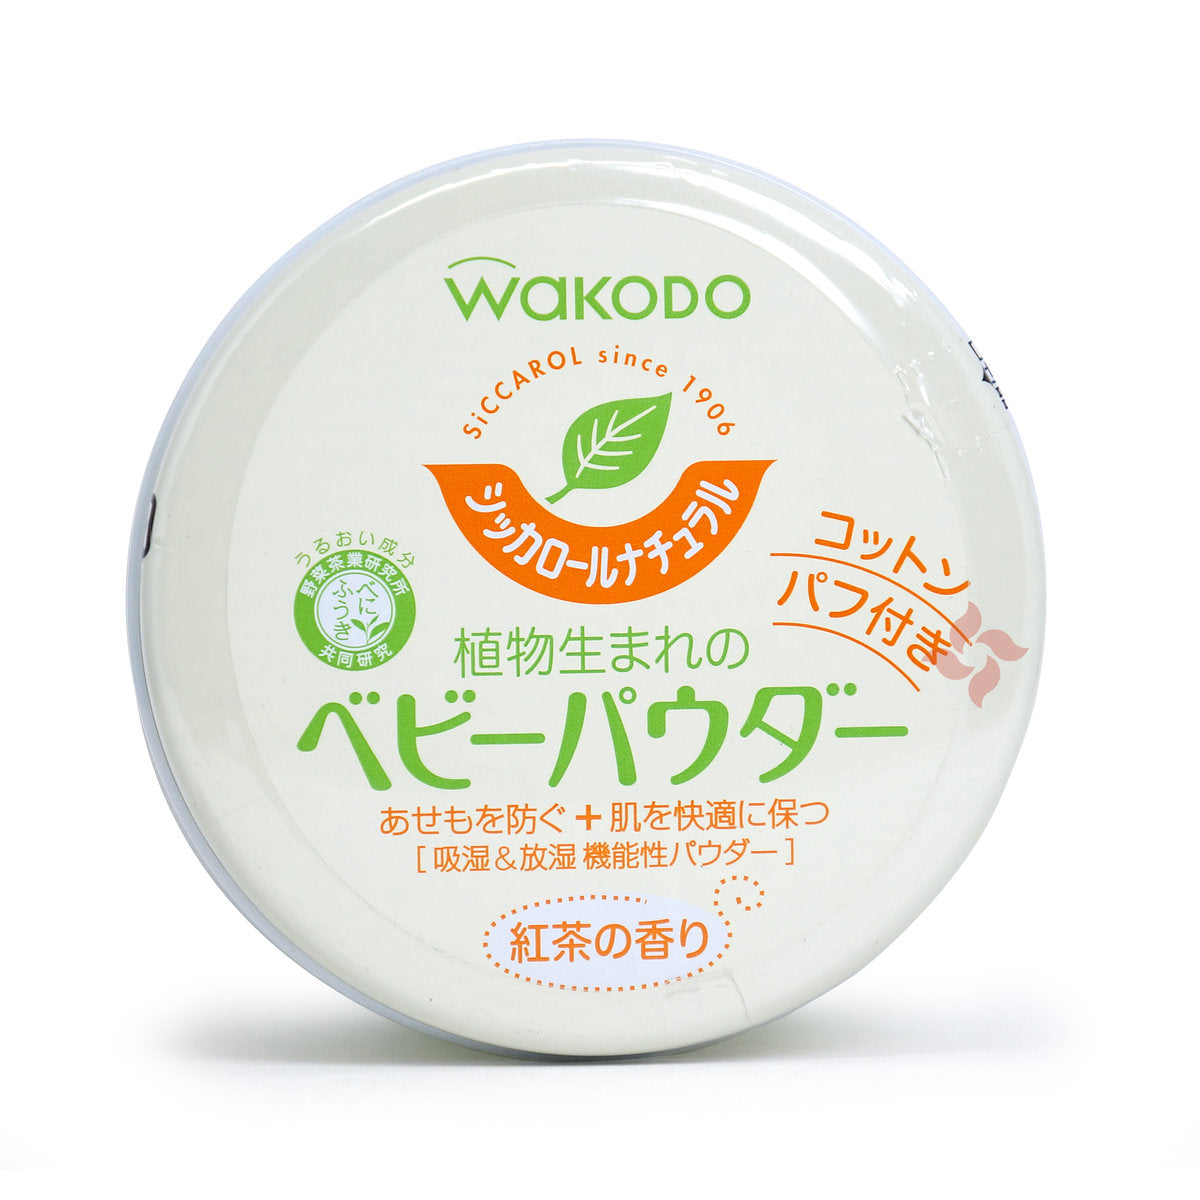 Wakodo Shikka Roll Natural baby skin care powder 120g